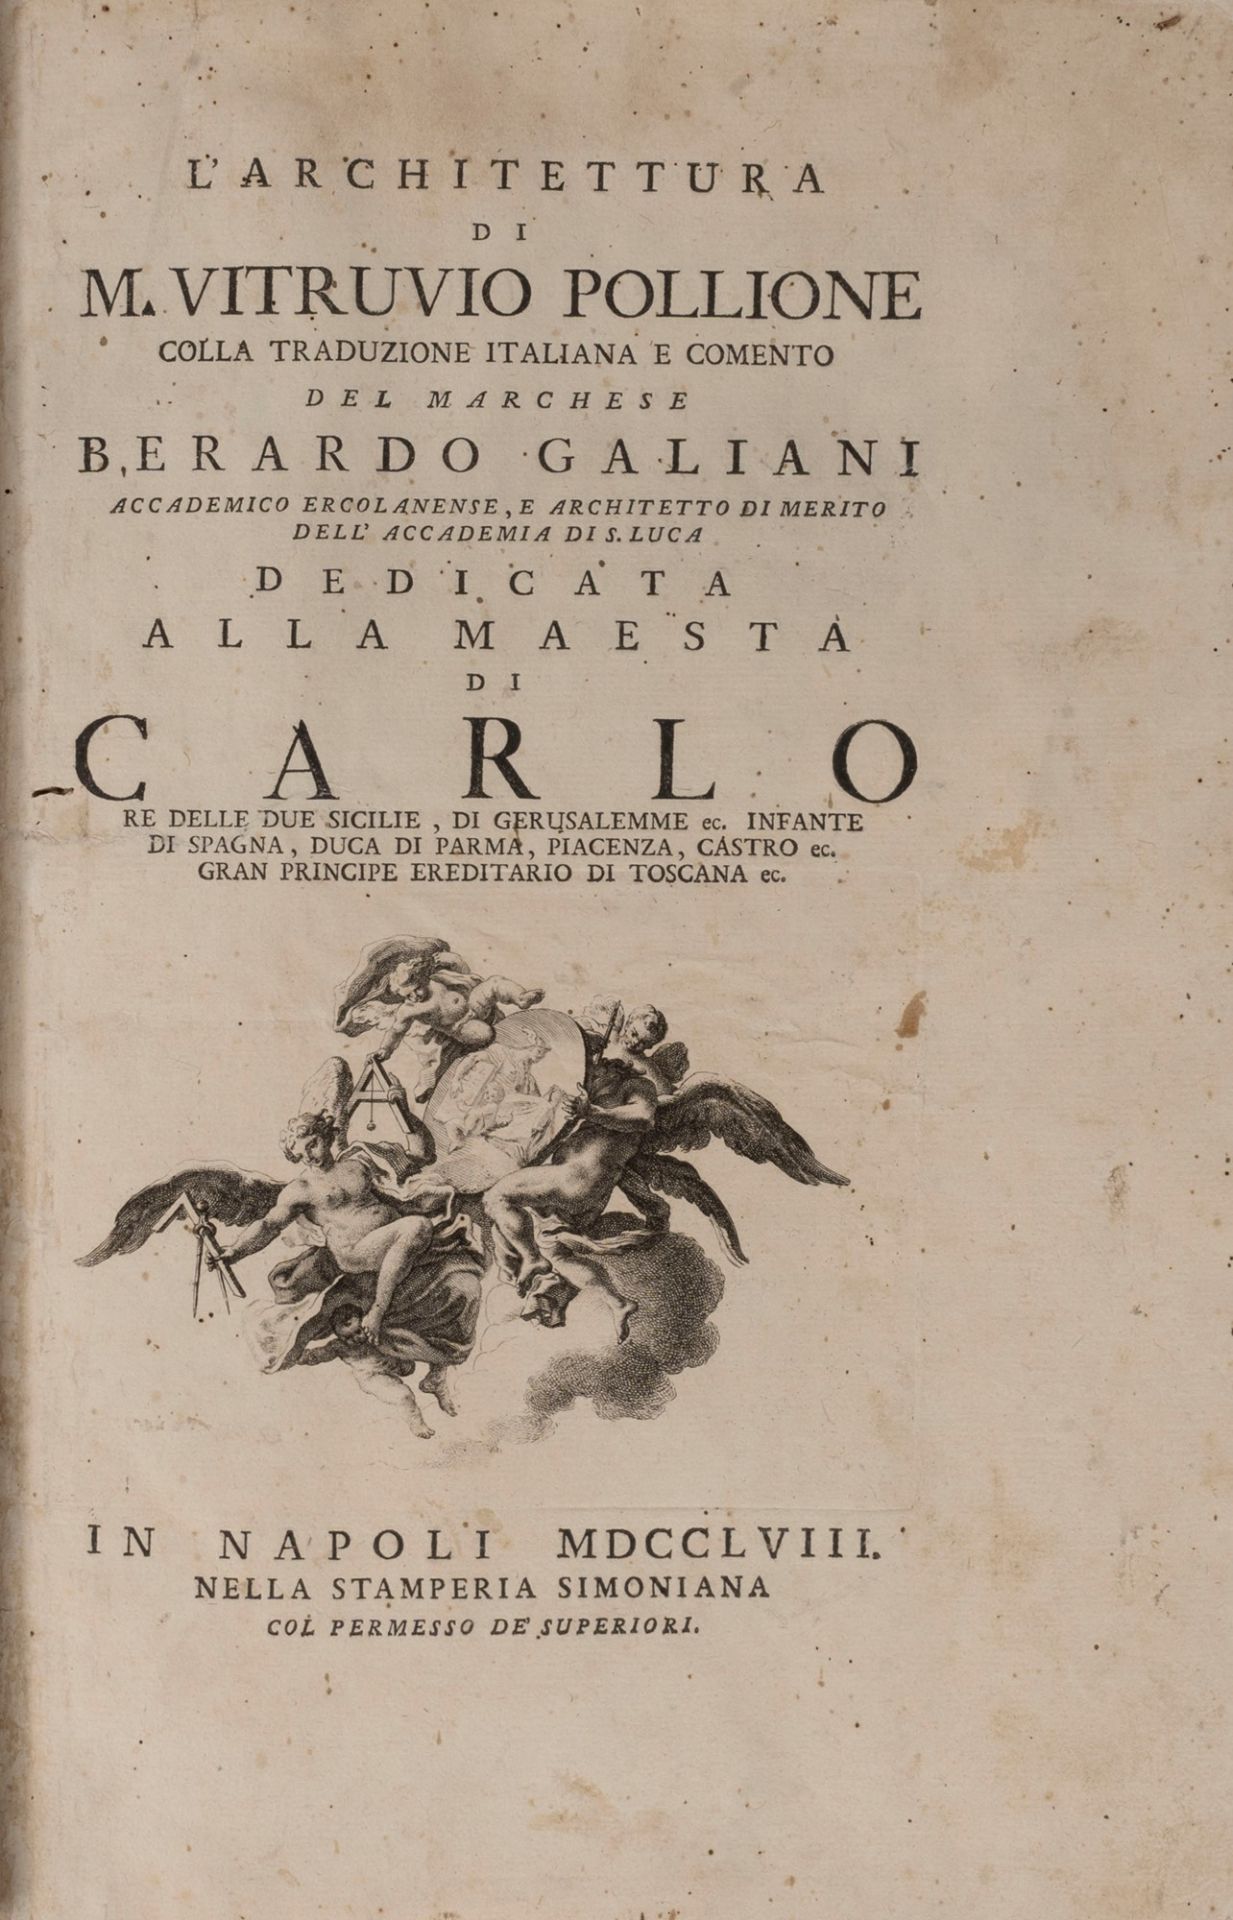 Vitruvio, Marco Pollione - The architecture of M. Vitruvius Pollione with the Italian translation an - Image 2 of 3